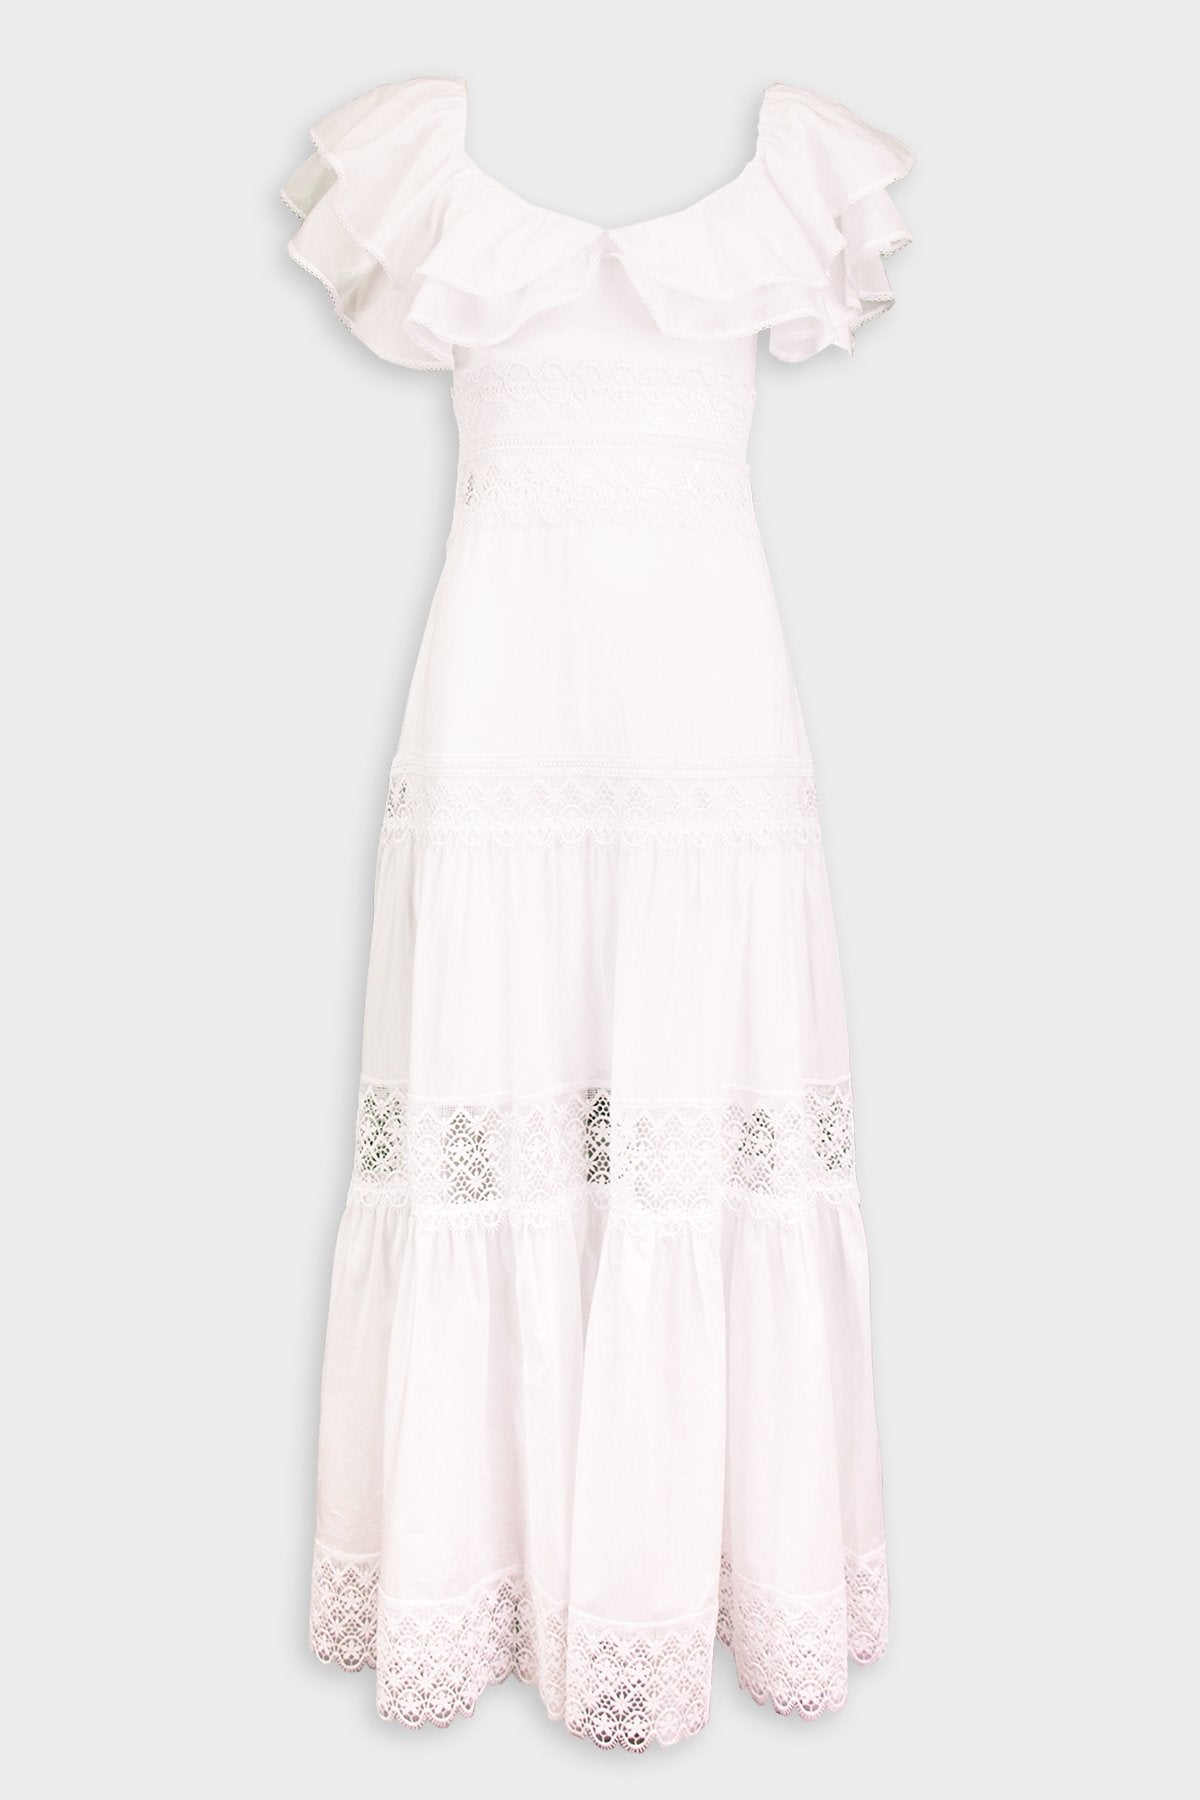 Florence Long Dress in White - shop-olivia.com